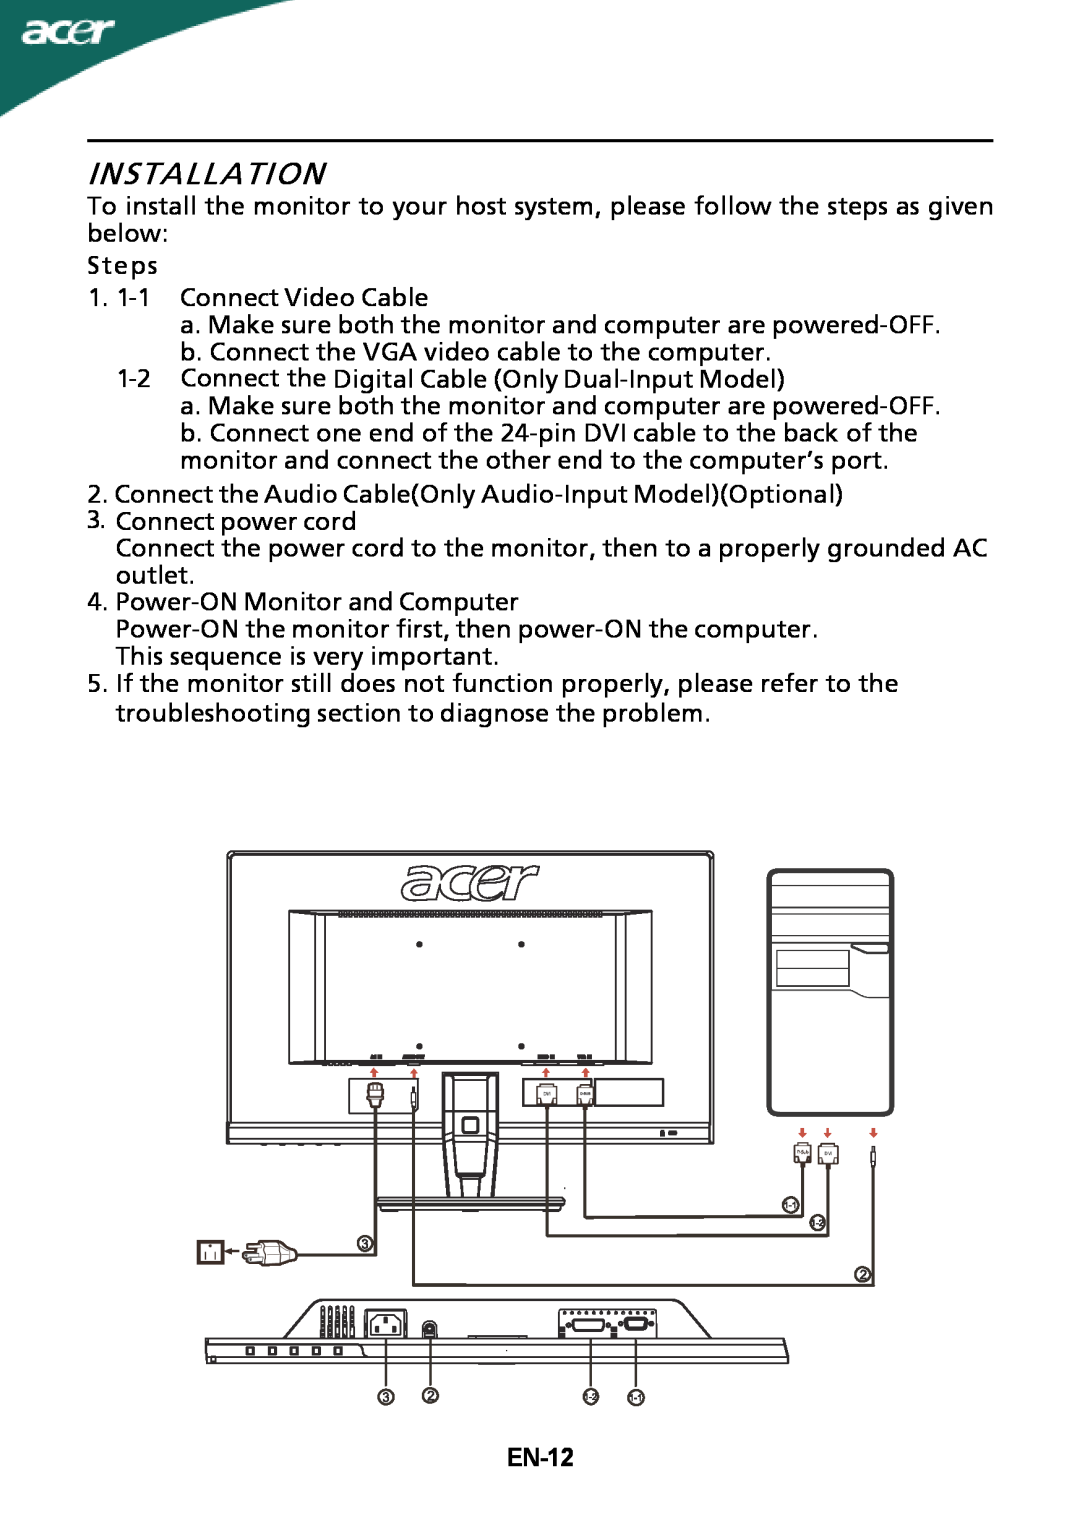 Acer P206HLxbd manual Installation, EN-12 